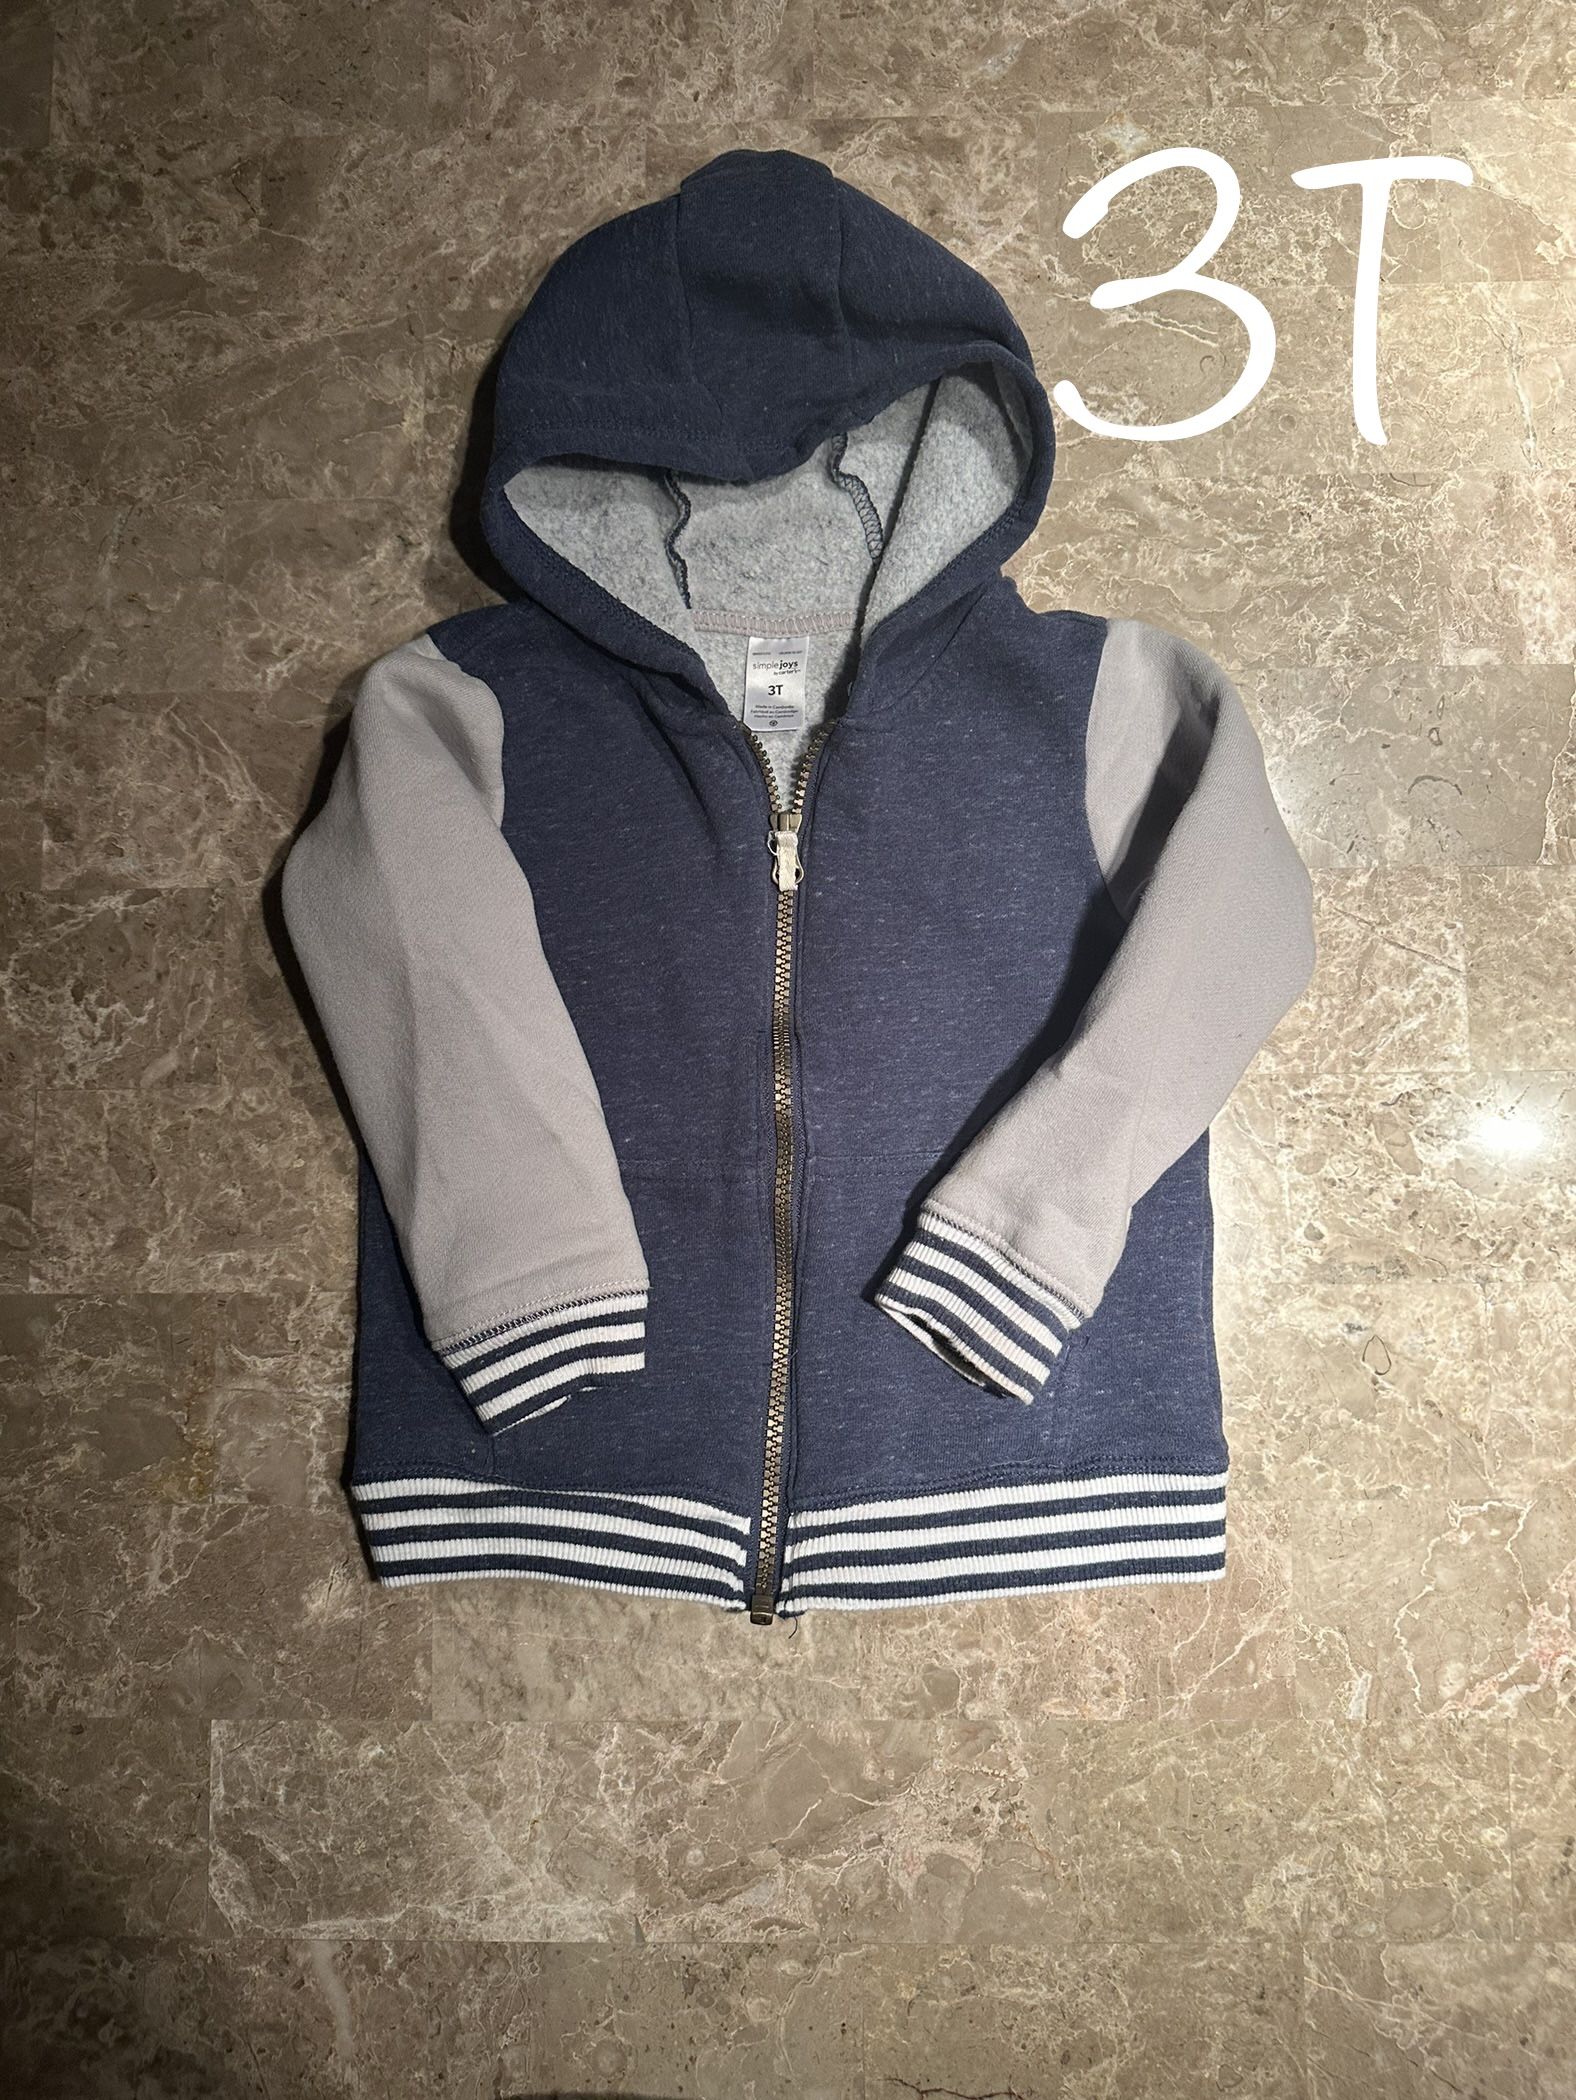 3T Clothing | Boys Fleece Zip Up Jacket (Lightweight)